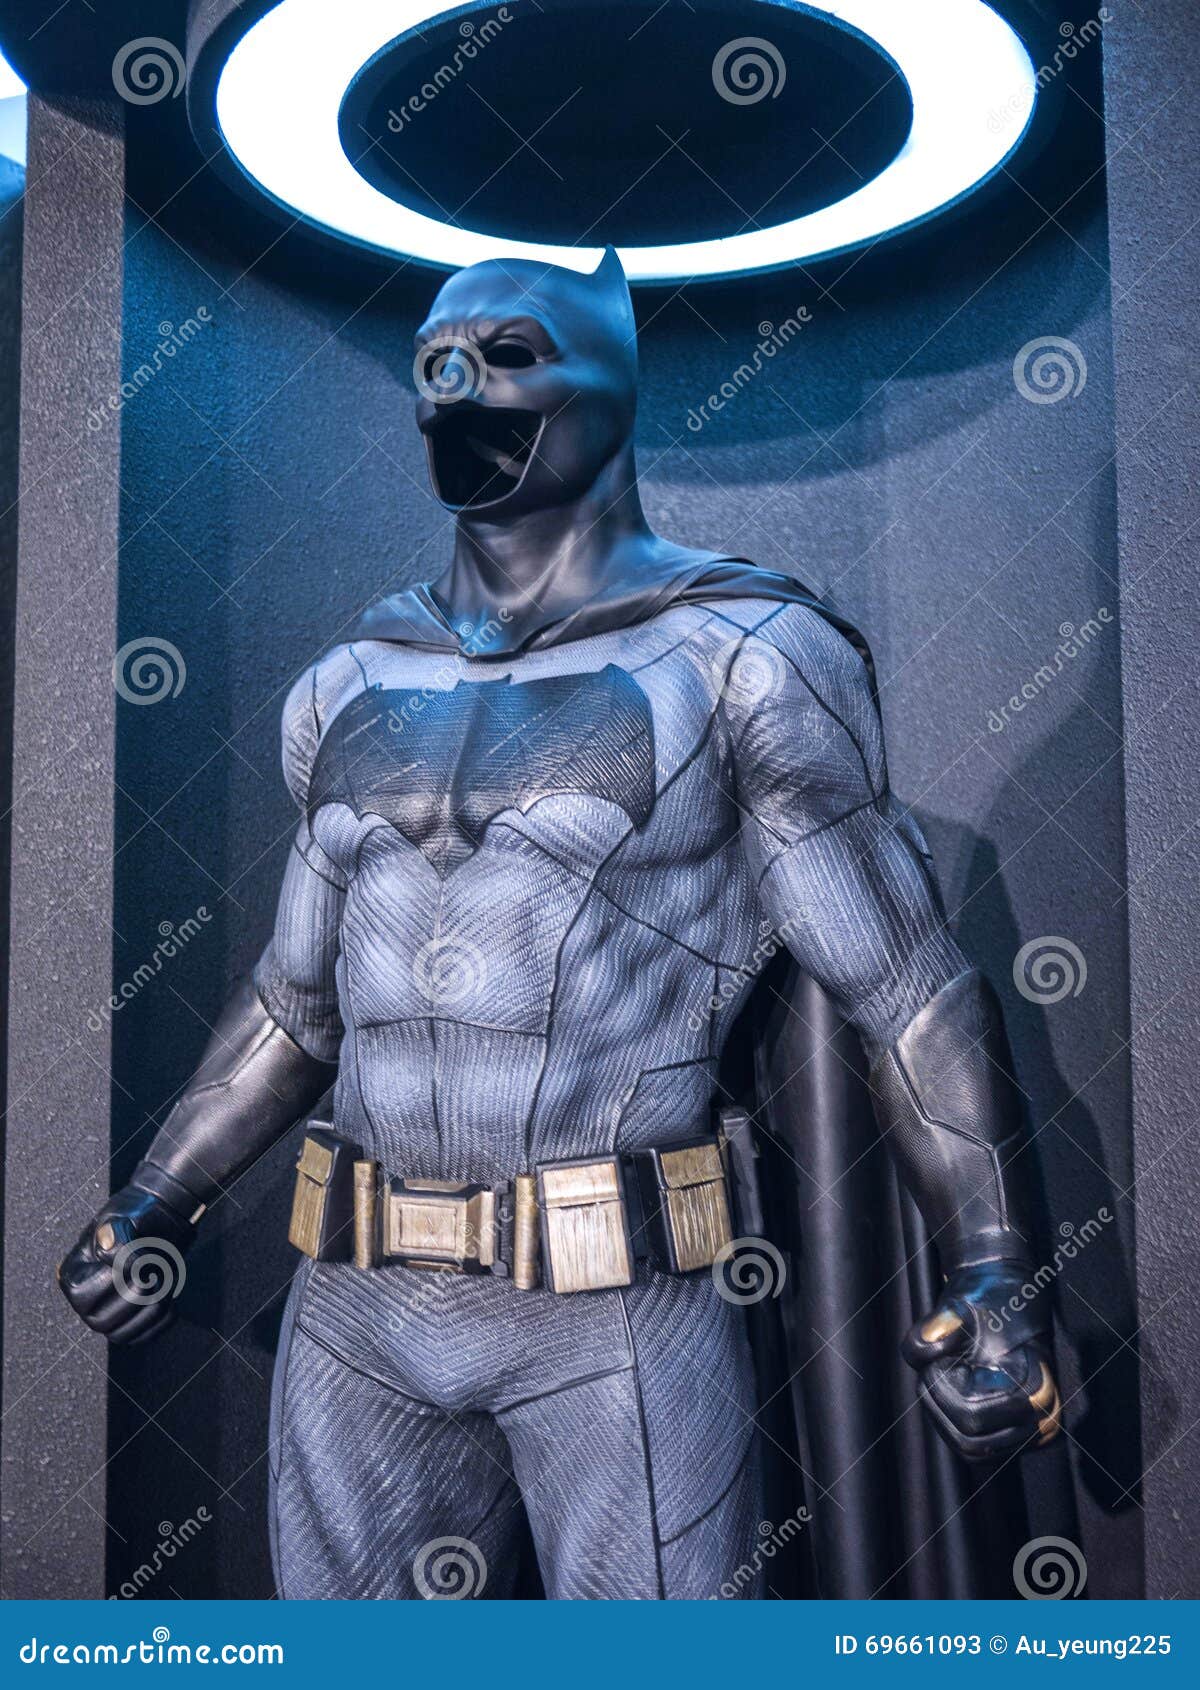 Batman costume editorial stock photo. Image of gold, comics - 69661093